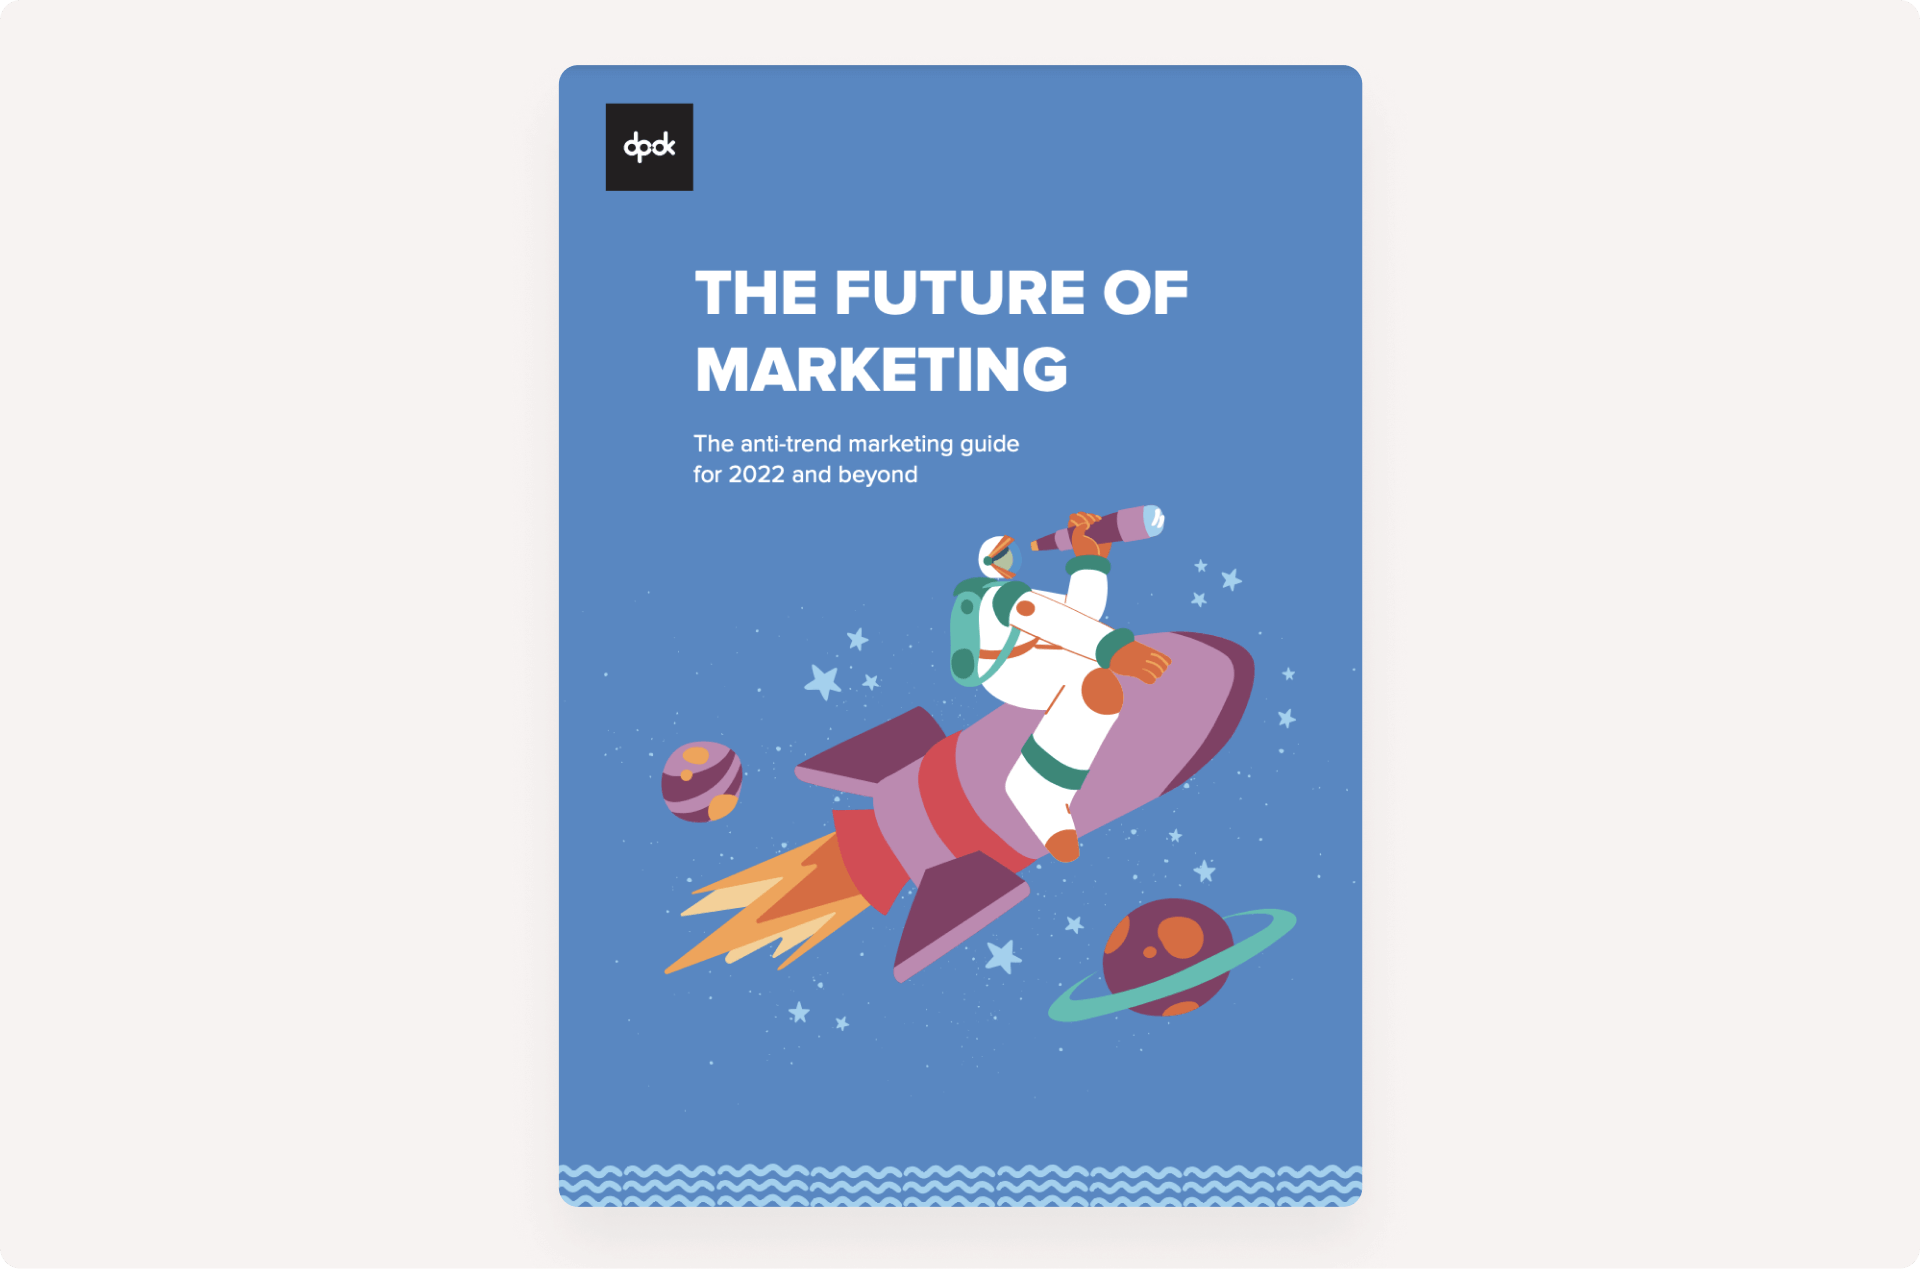 The future of marketing